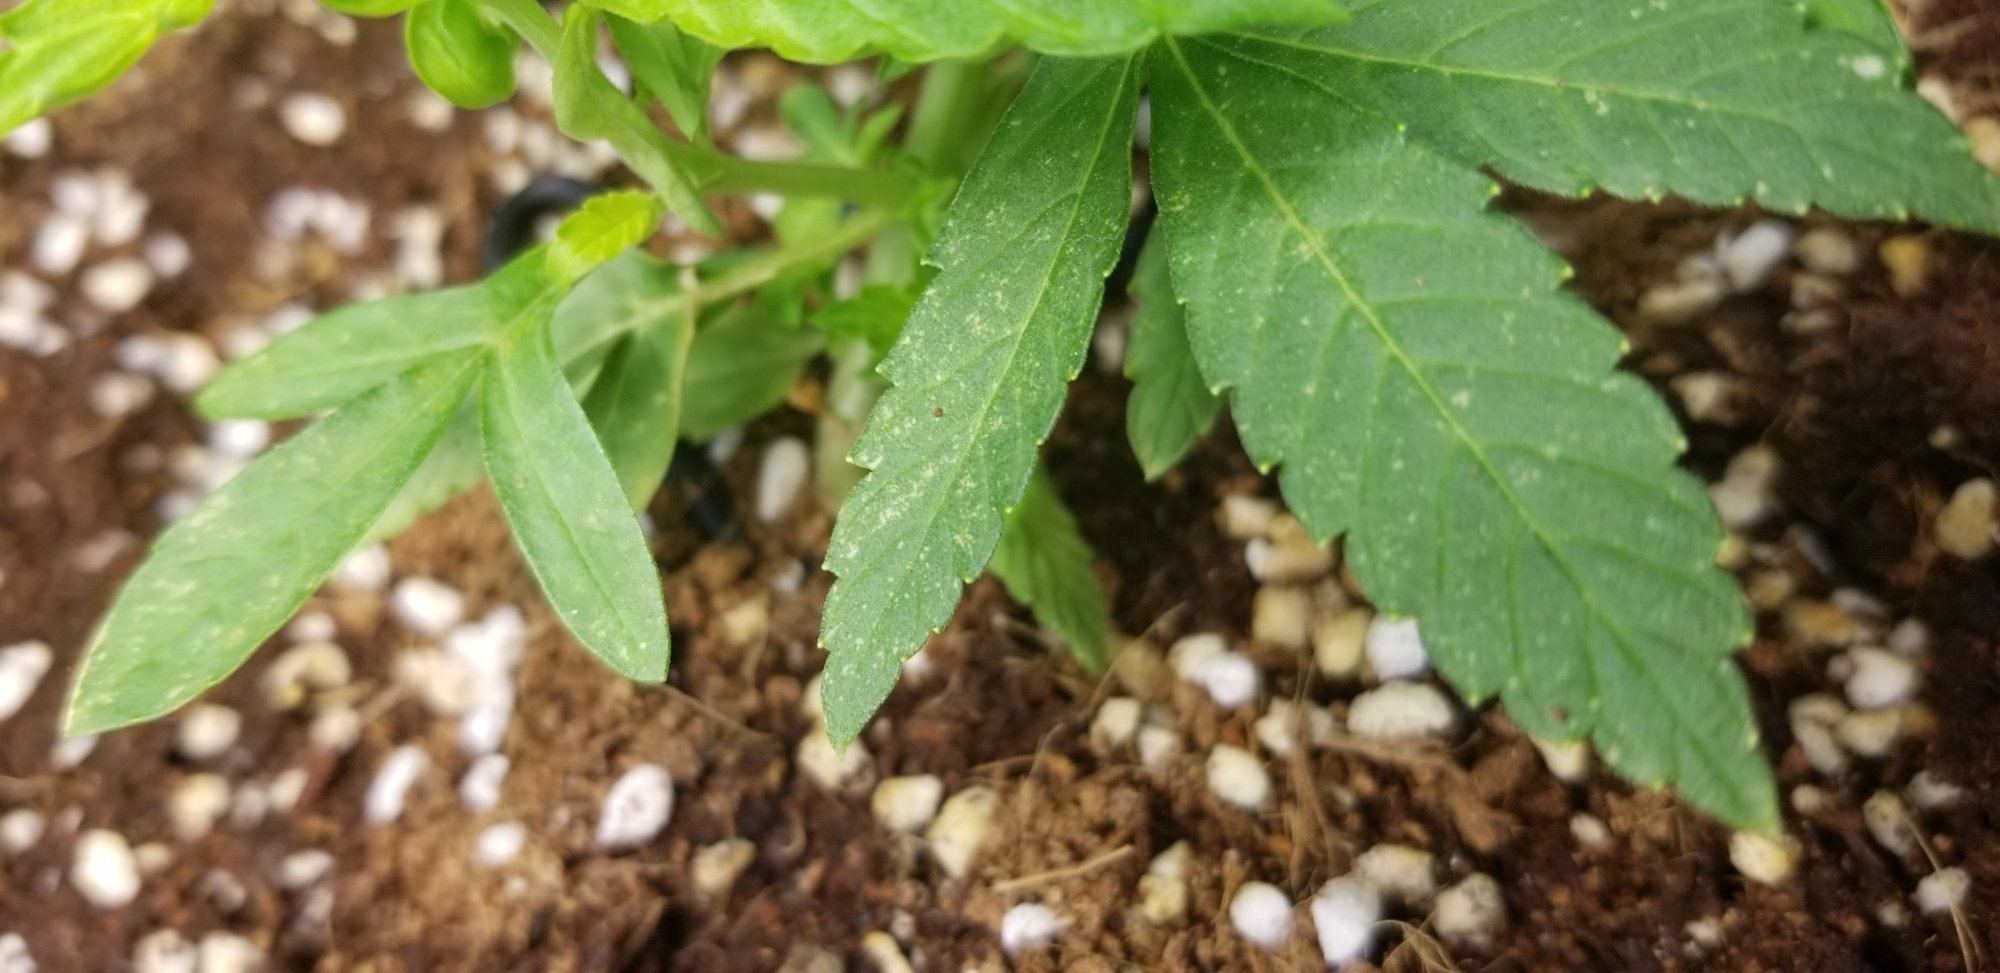 Strange spots on leaves 3